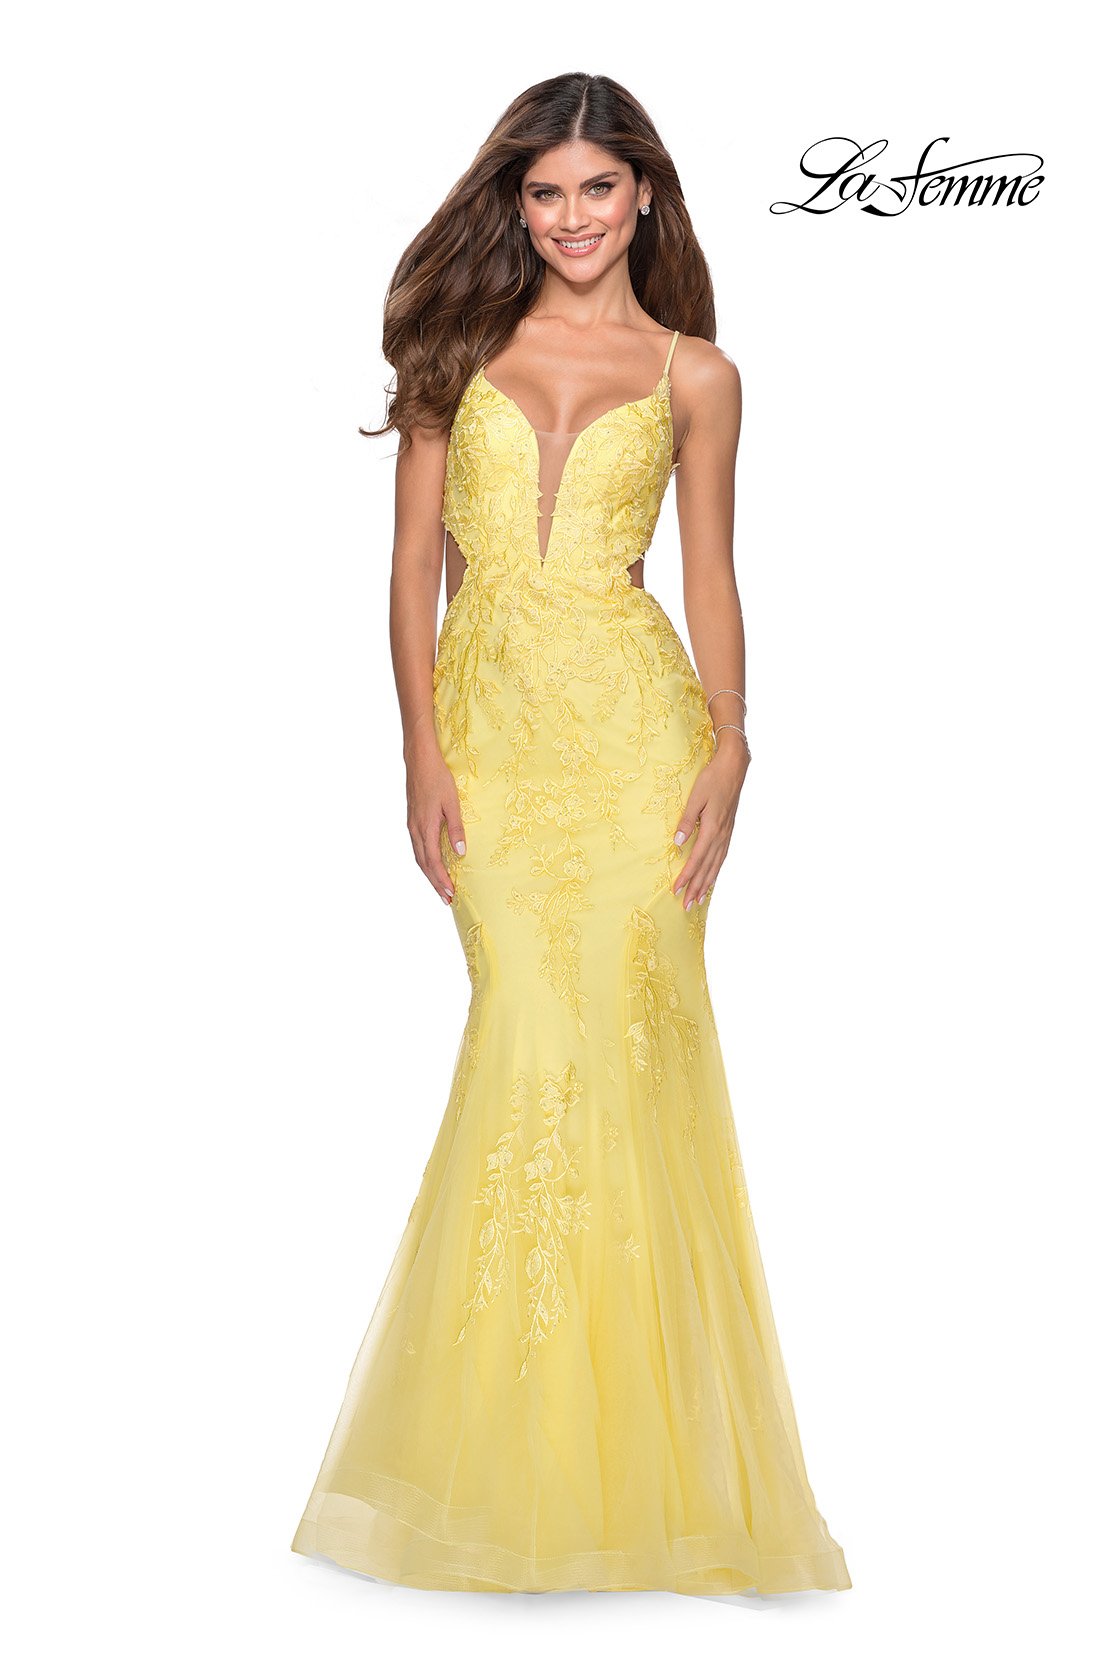 La Femme 28768 Dress - La Femme Prom Dresses - Formal Approach